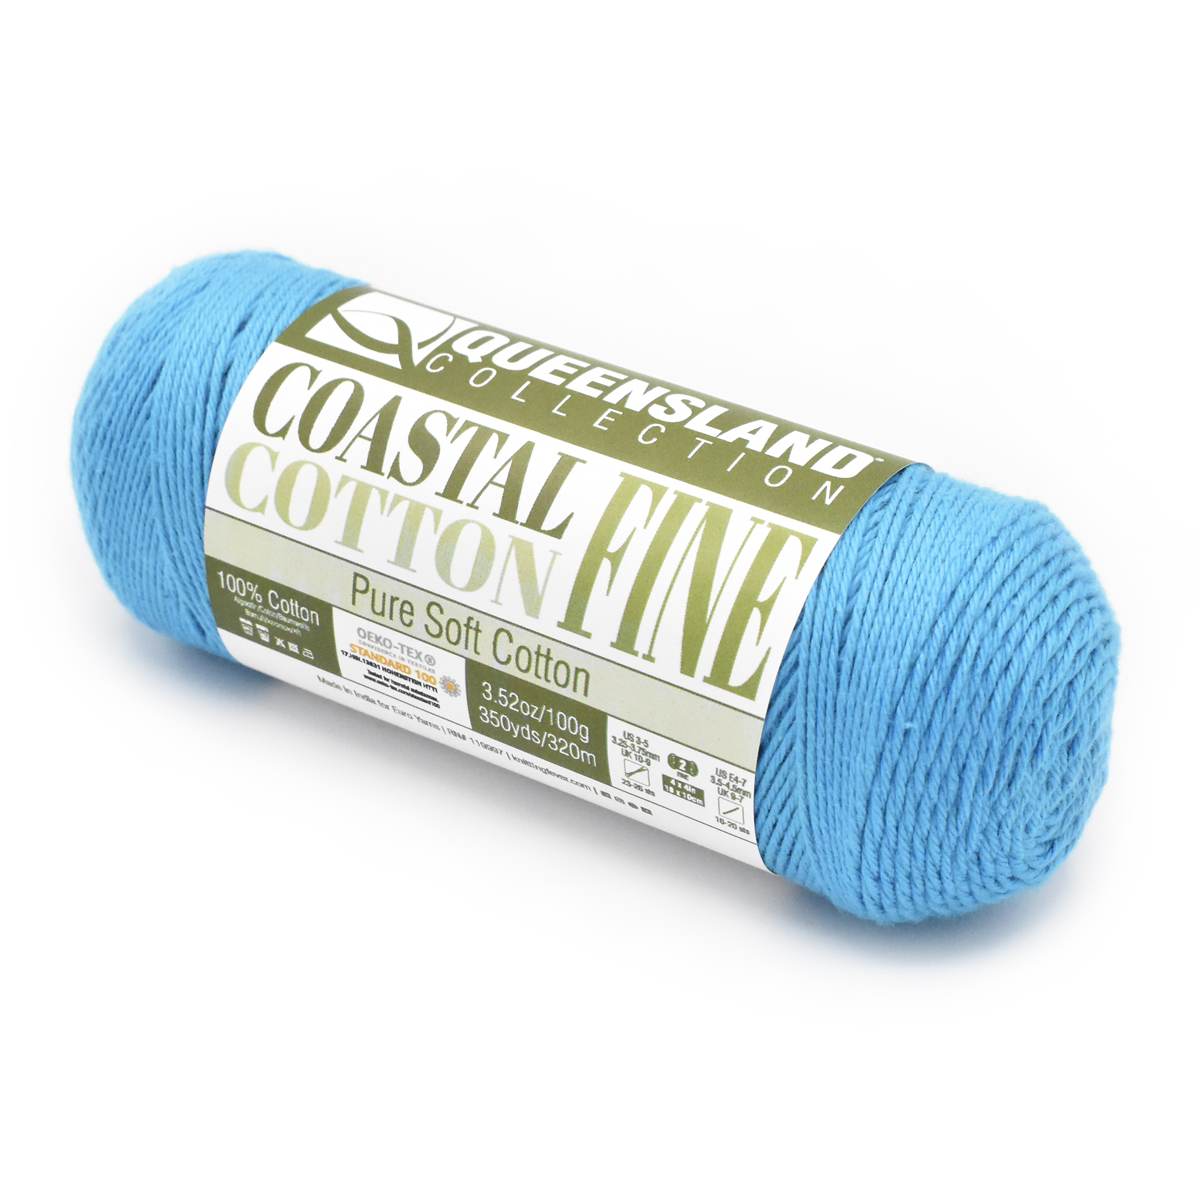 a skein of Coastal Cotton Fine